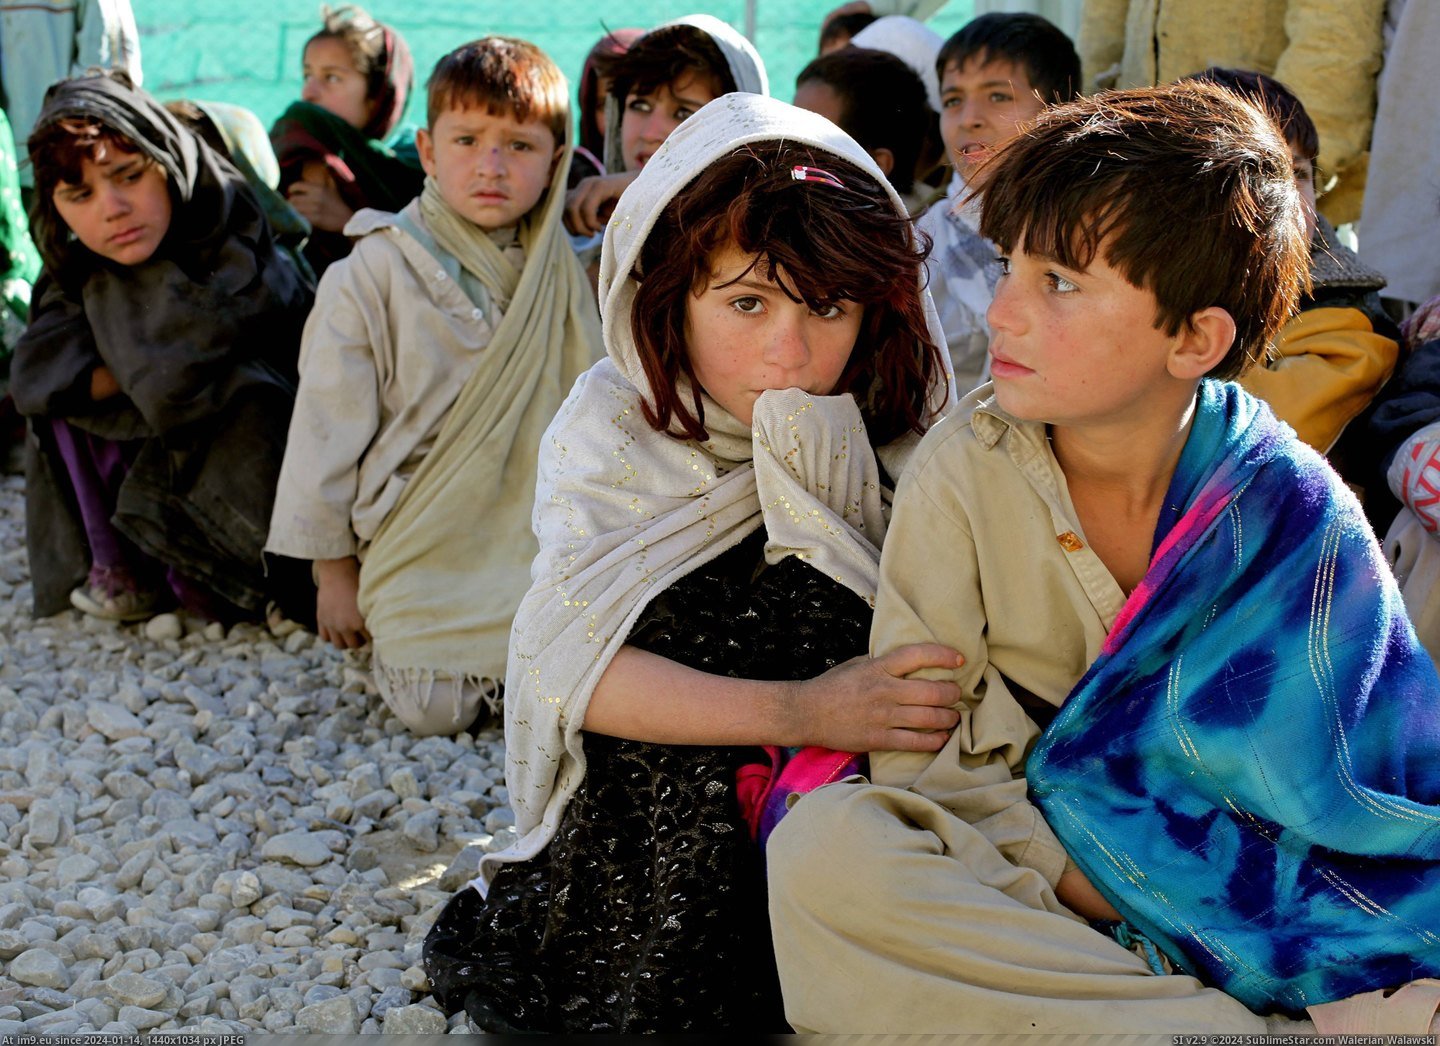 #Children #Khost #Pashtun #Afghanistan [Pics] Pashtun children from Khost, Afghanistan Pic. (Bild von album My r/PICS favs))